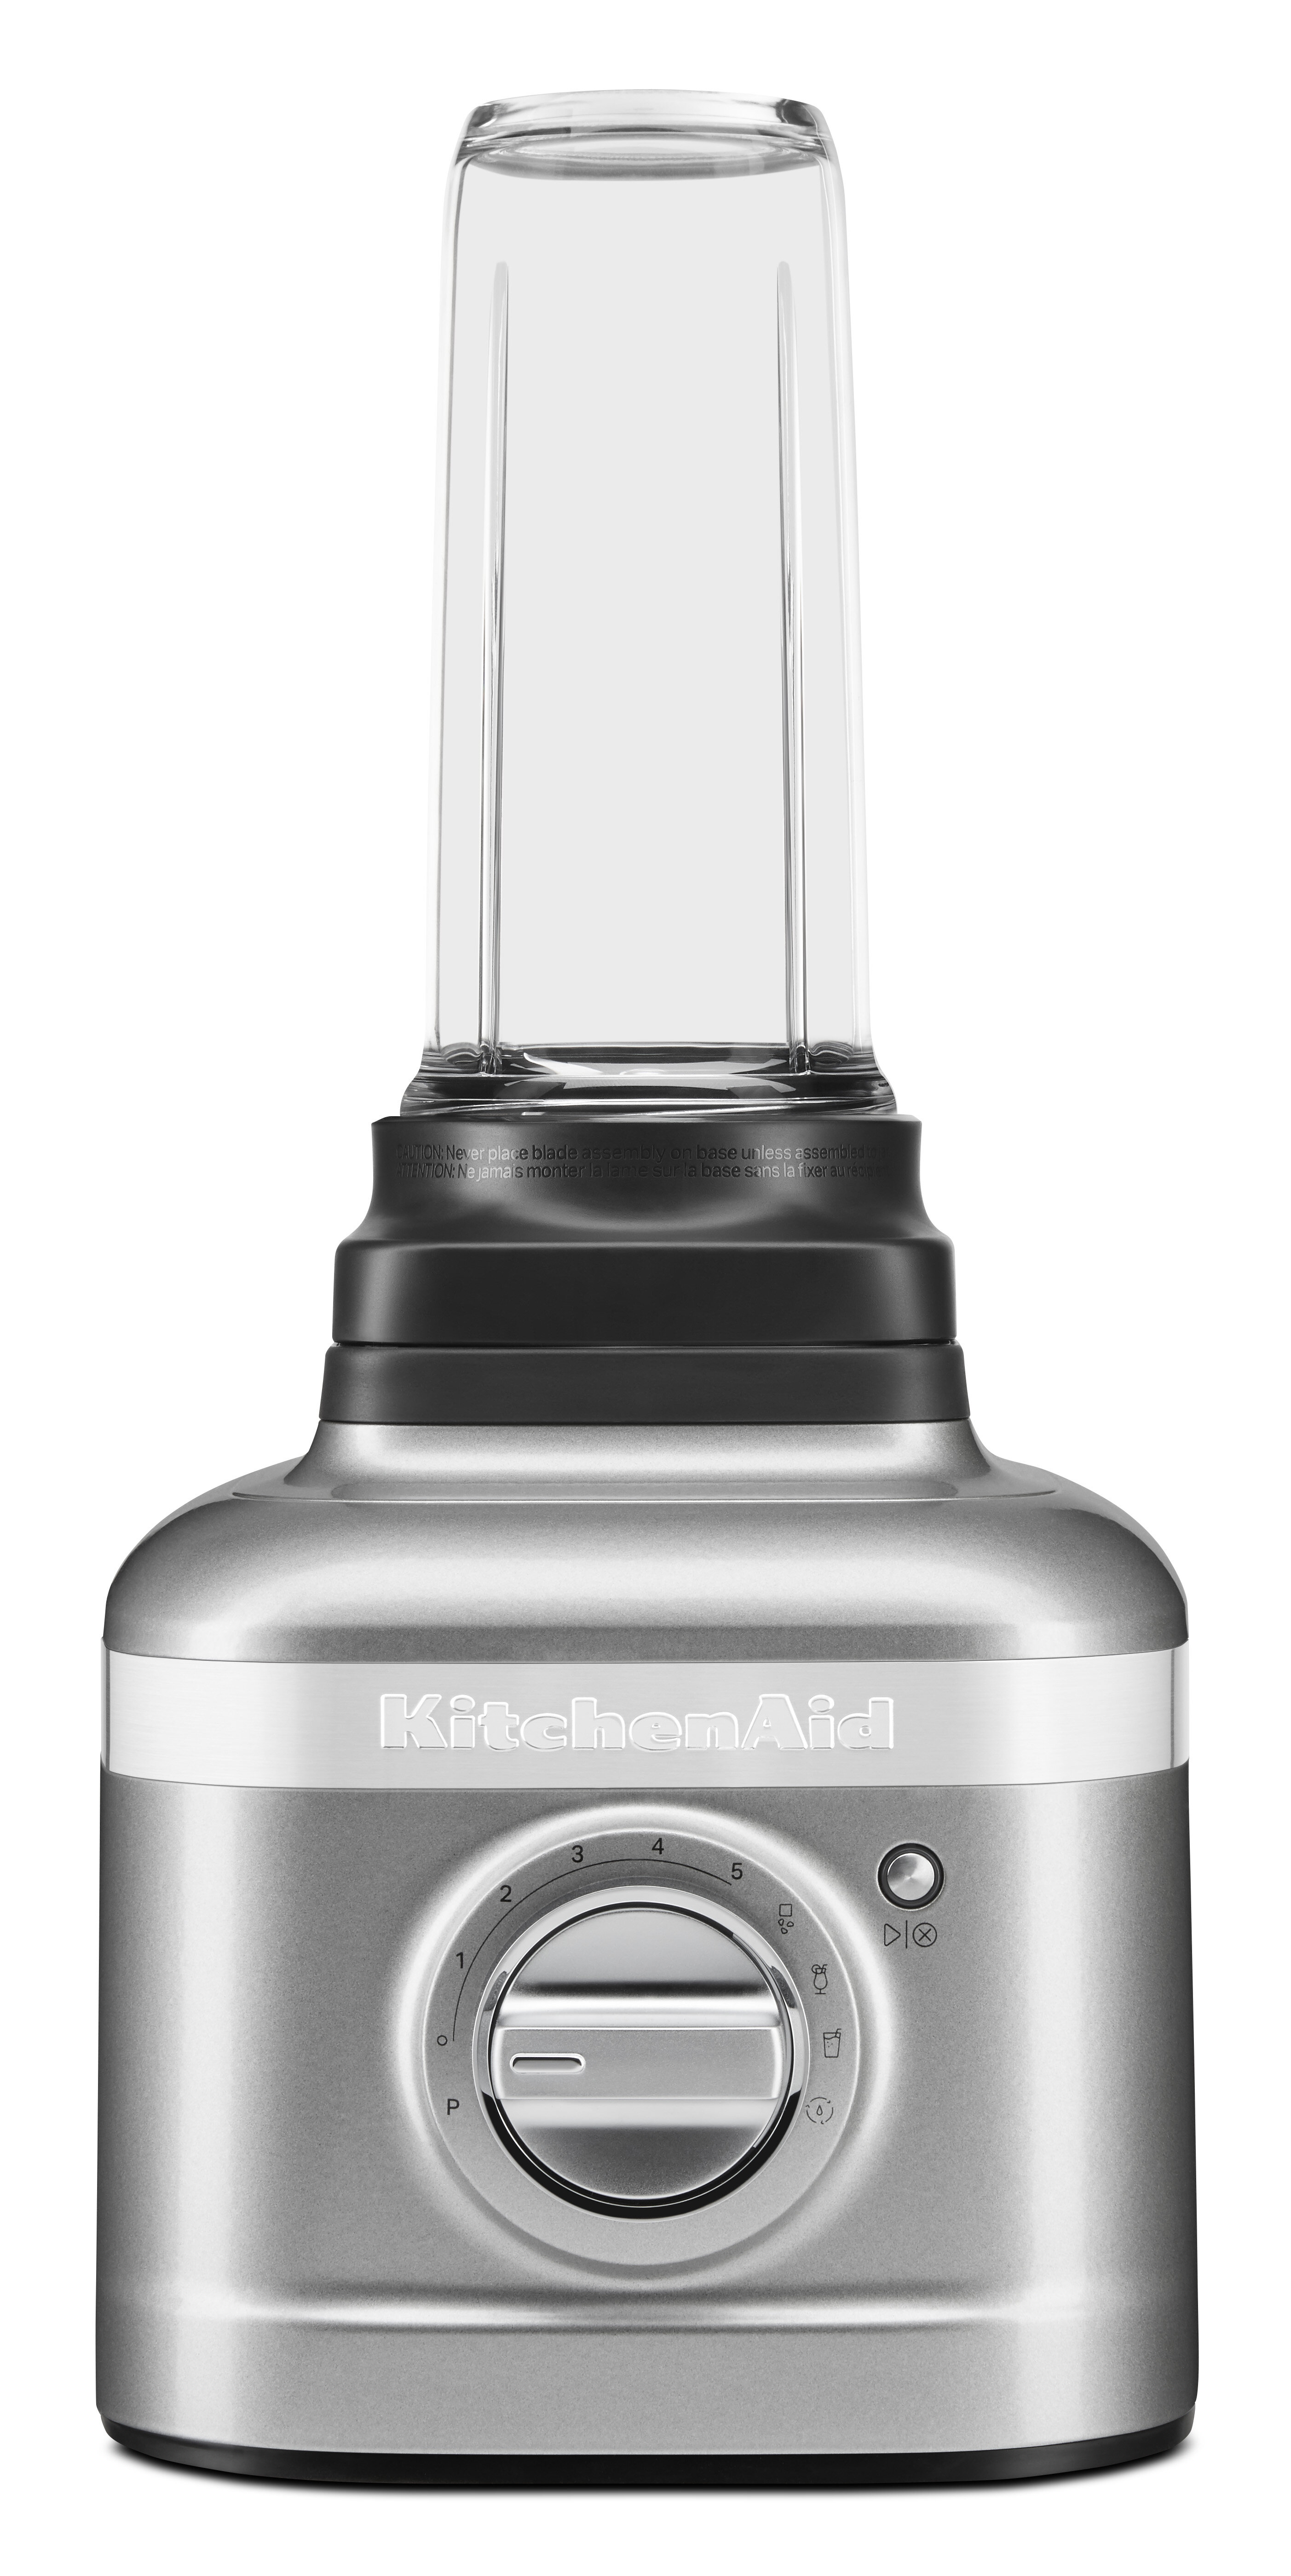 KitchenAid K400 Variable Speed Countertop Blender | Wayfair